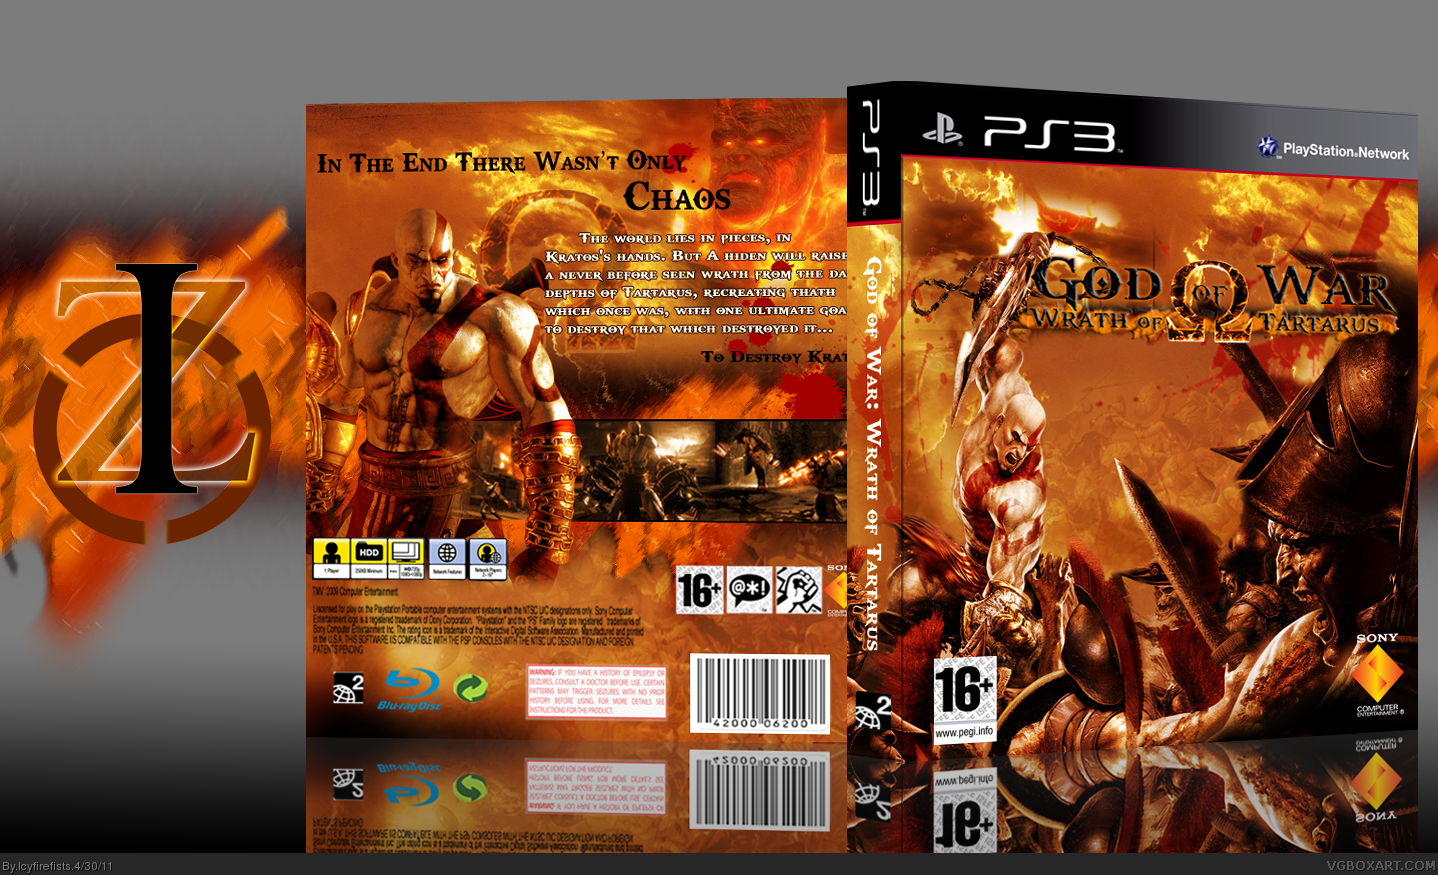 God of War: Wrath of Tartarus box cover